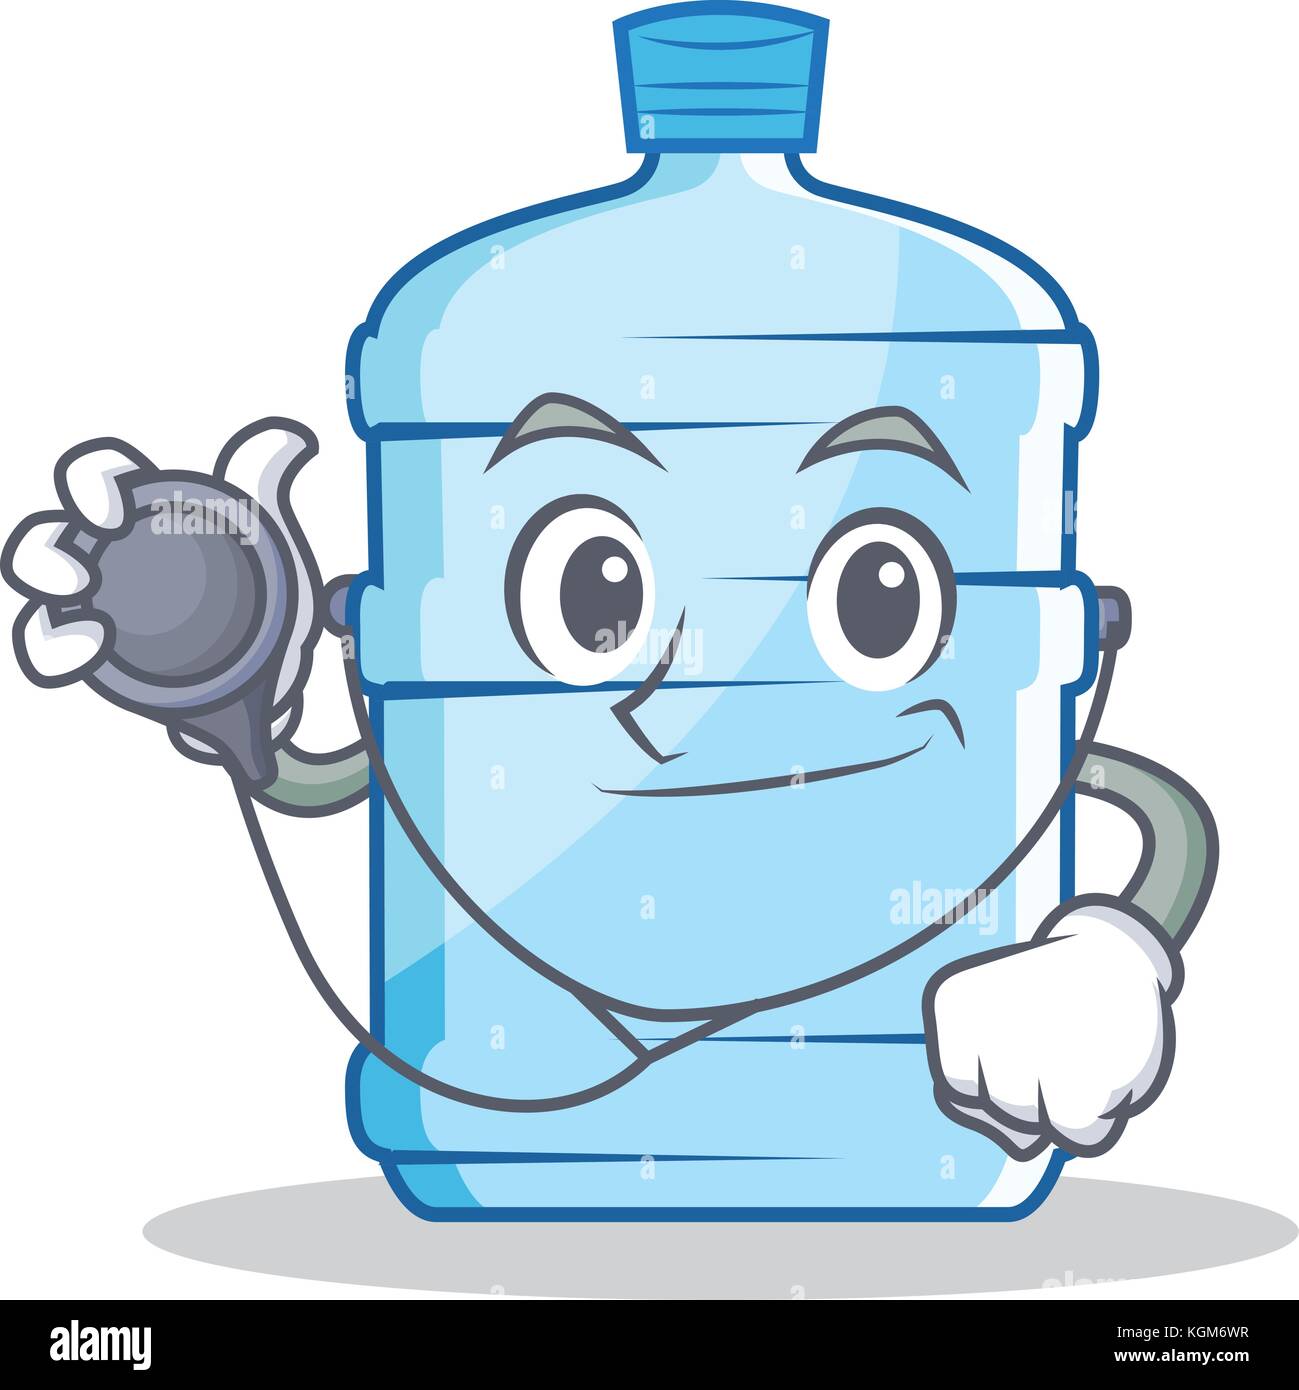 Doctor gallon character cartoon style Stock Vector Image & Art - Alamy